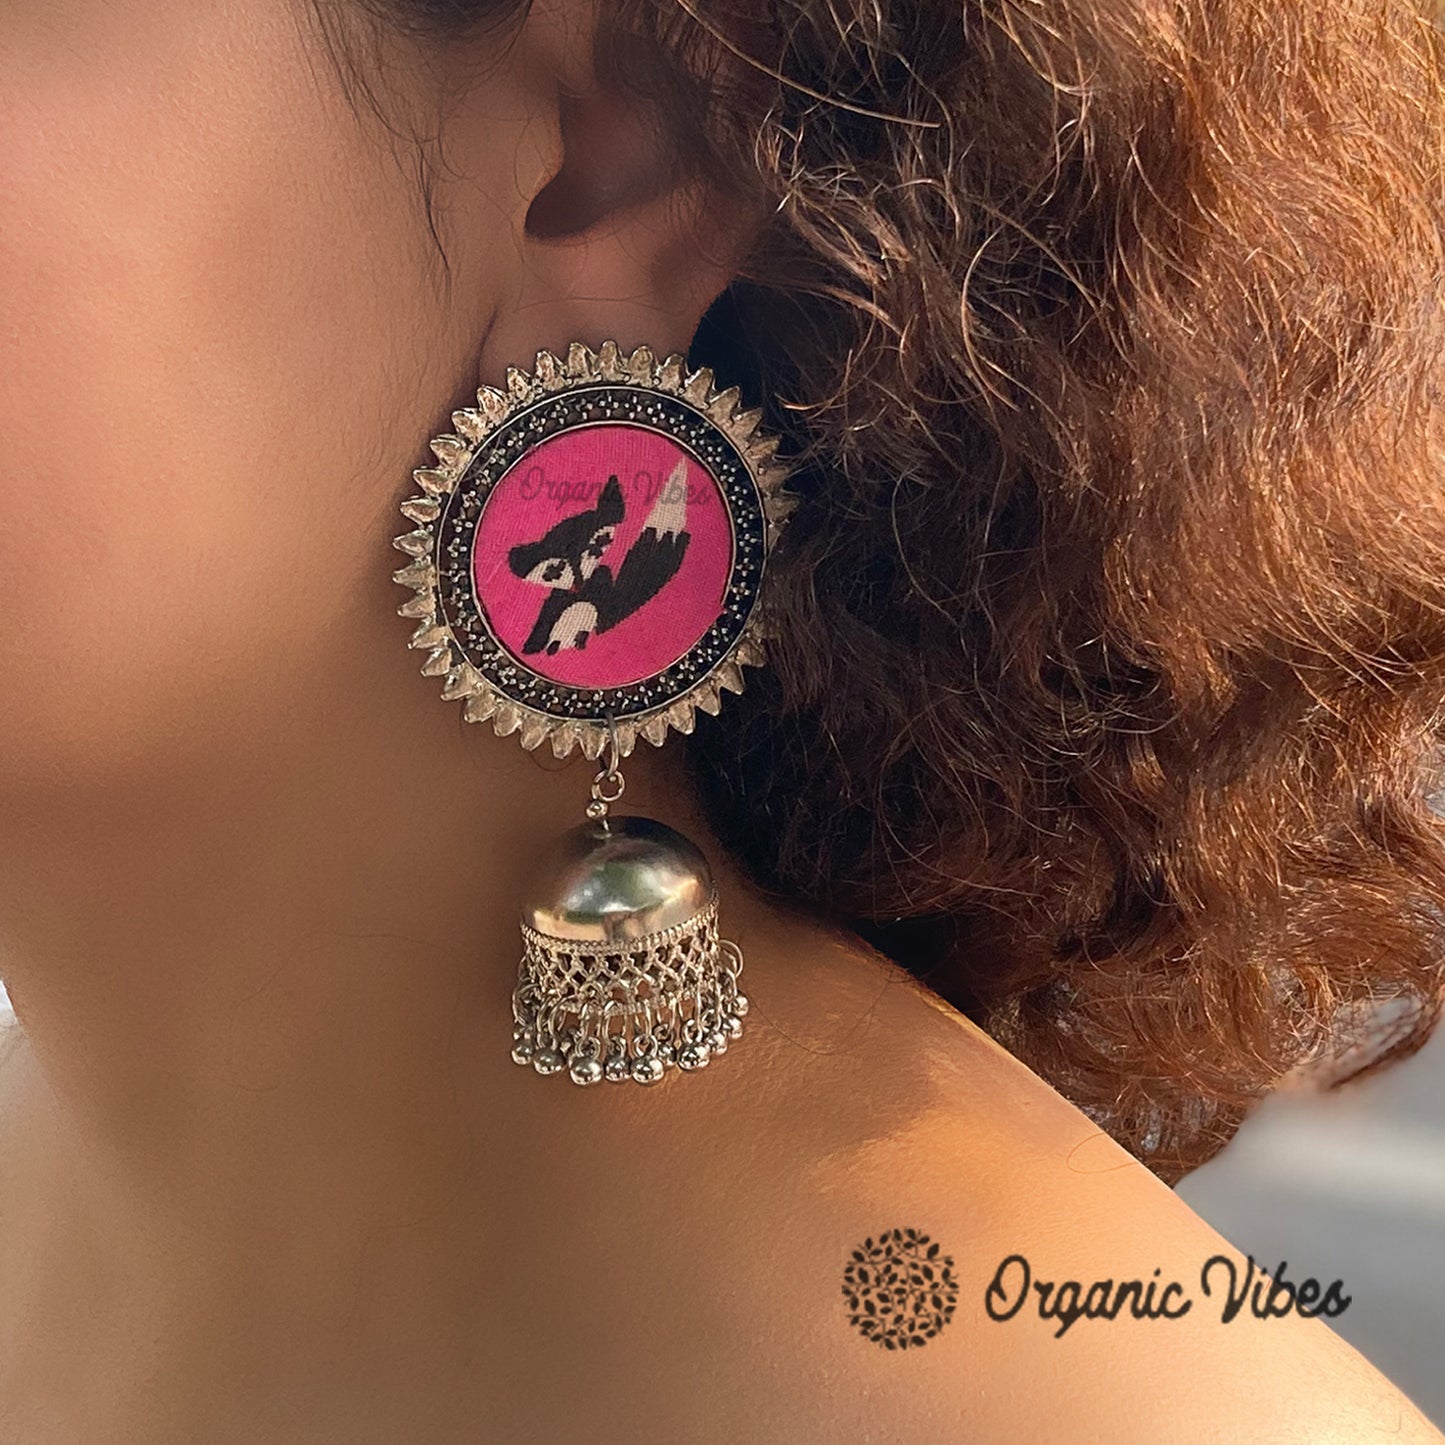 Organic Vibes Handmade Handmade Pink With Cat Printed Silver Jhumka Fabric Earrings For Women